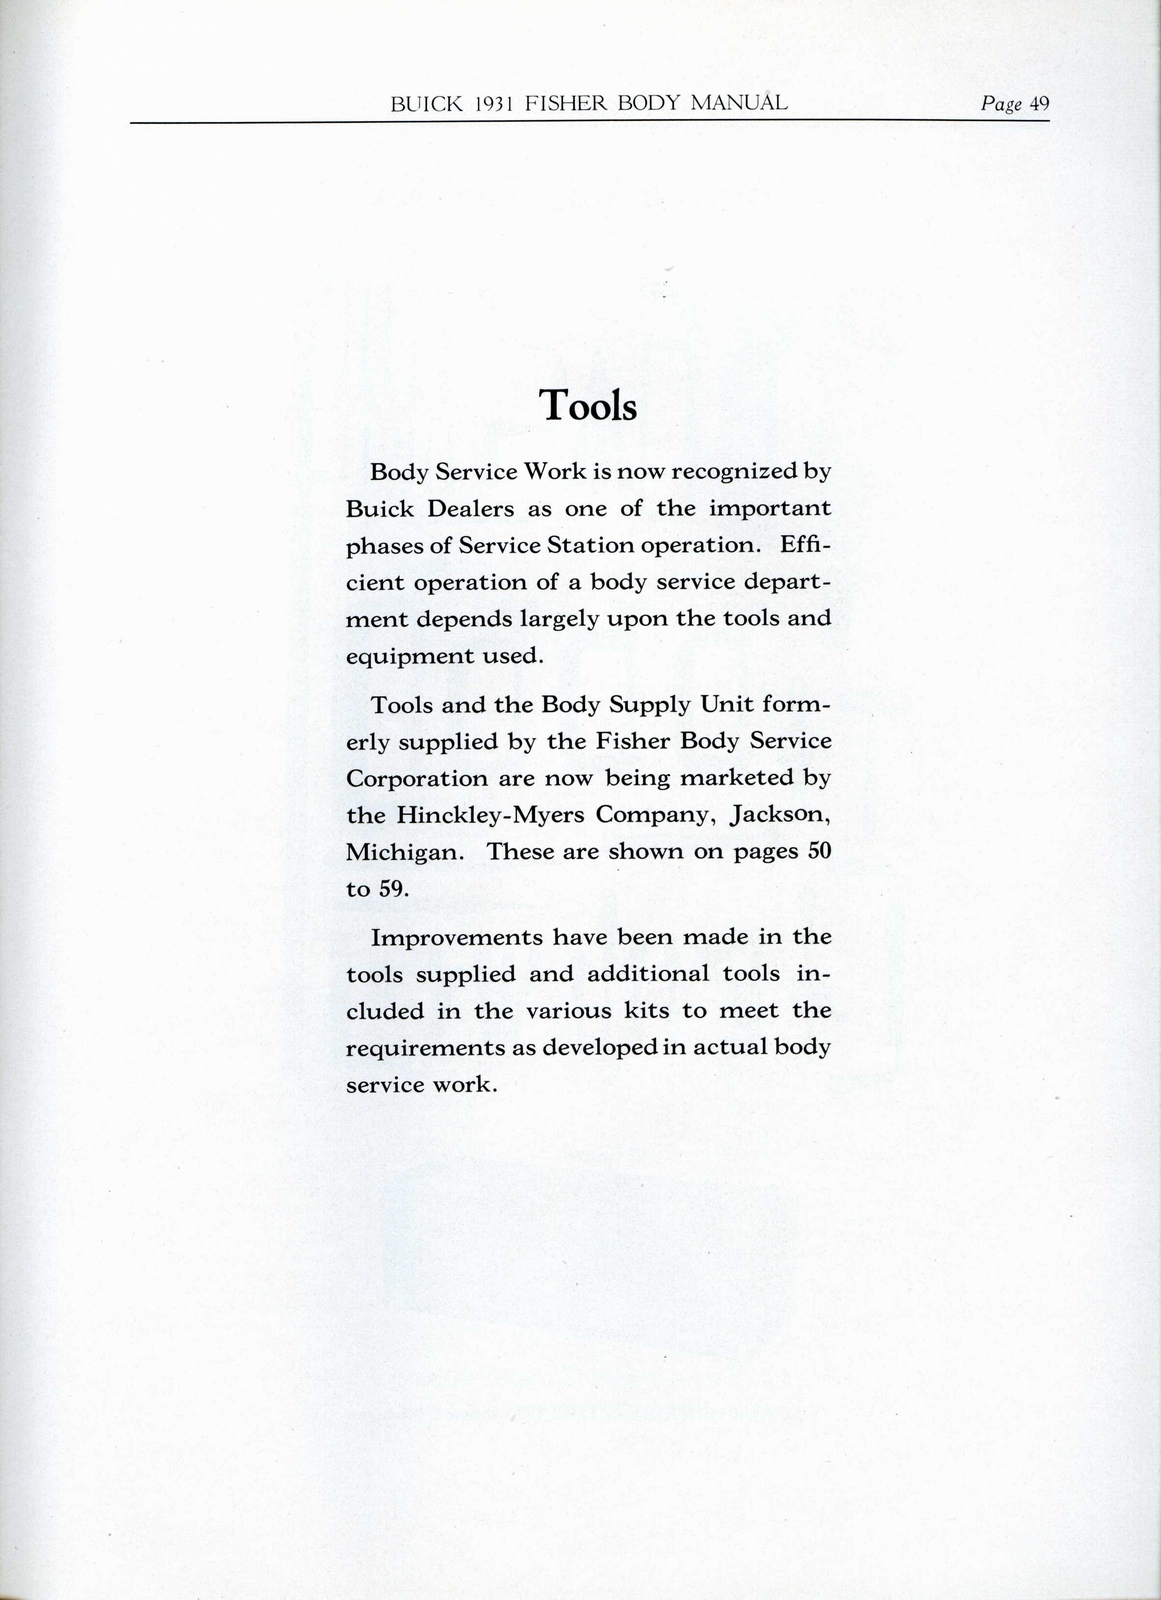 n_1931 Buick Fisher Body Manual-49.jpg